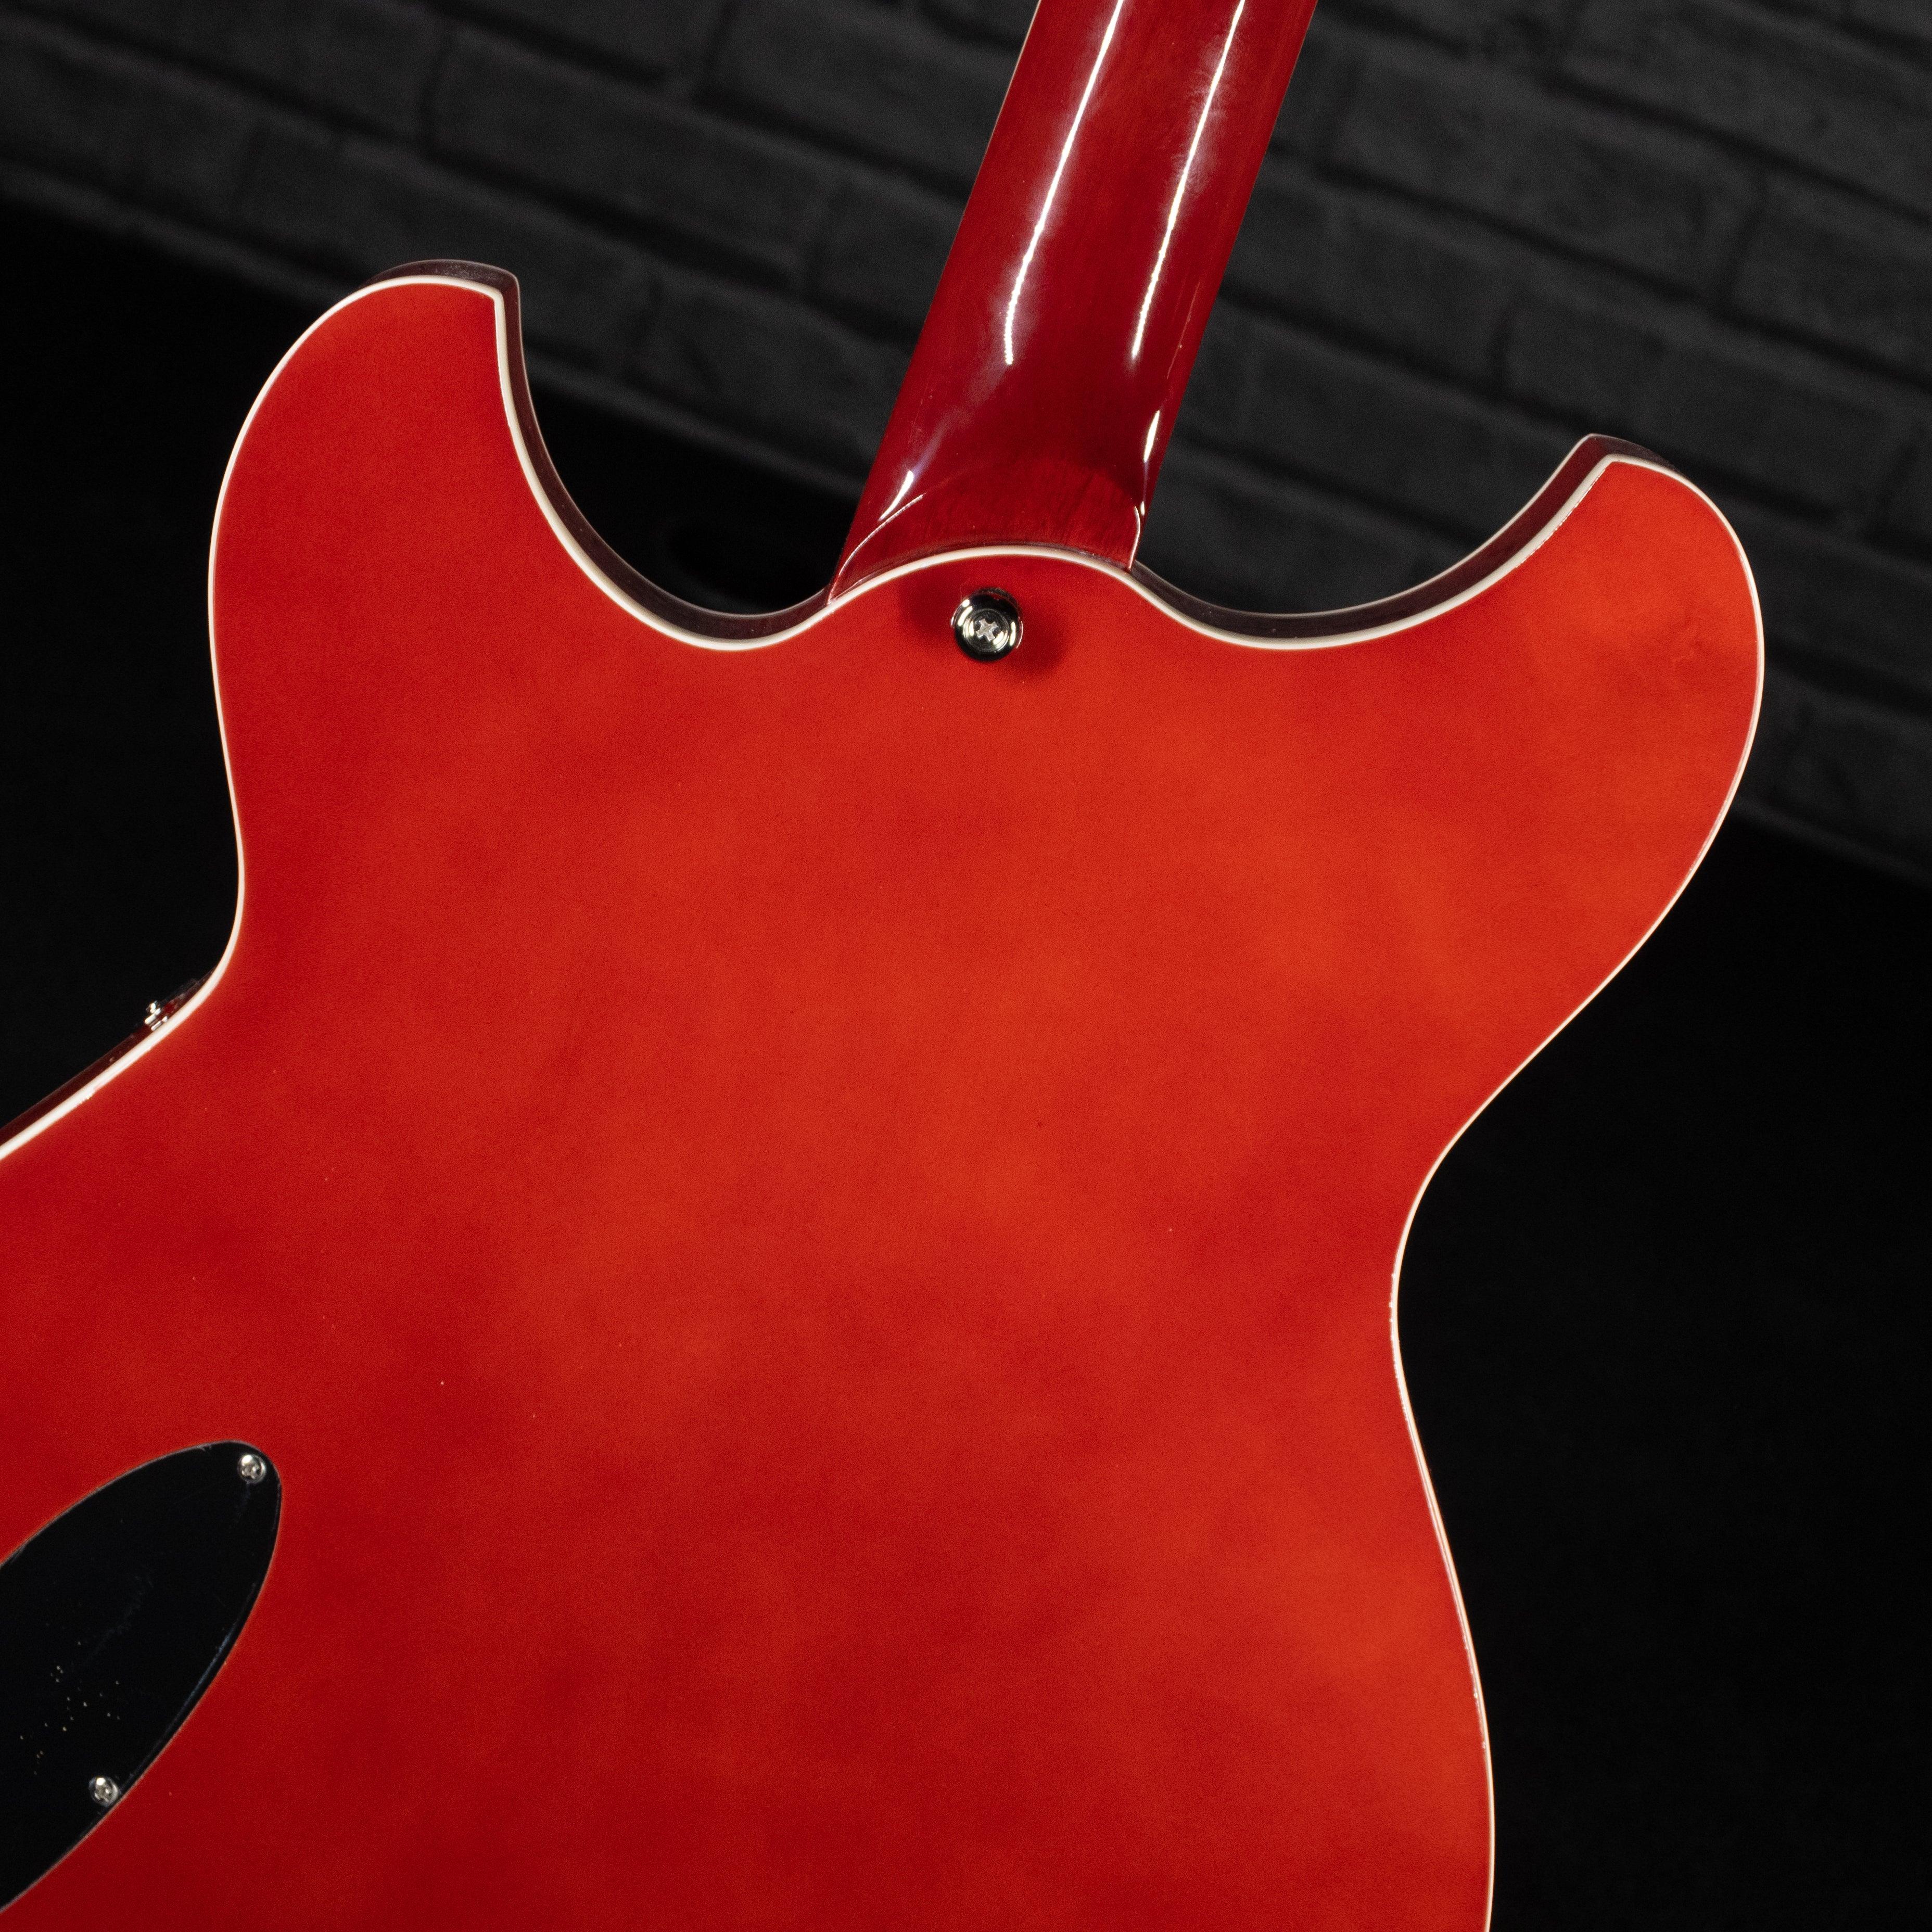 Rivolta Regata VII Semi-Hollowbody Guitar - Impulse Music Co.